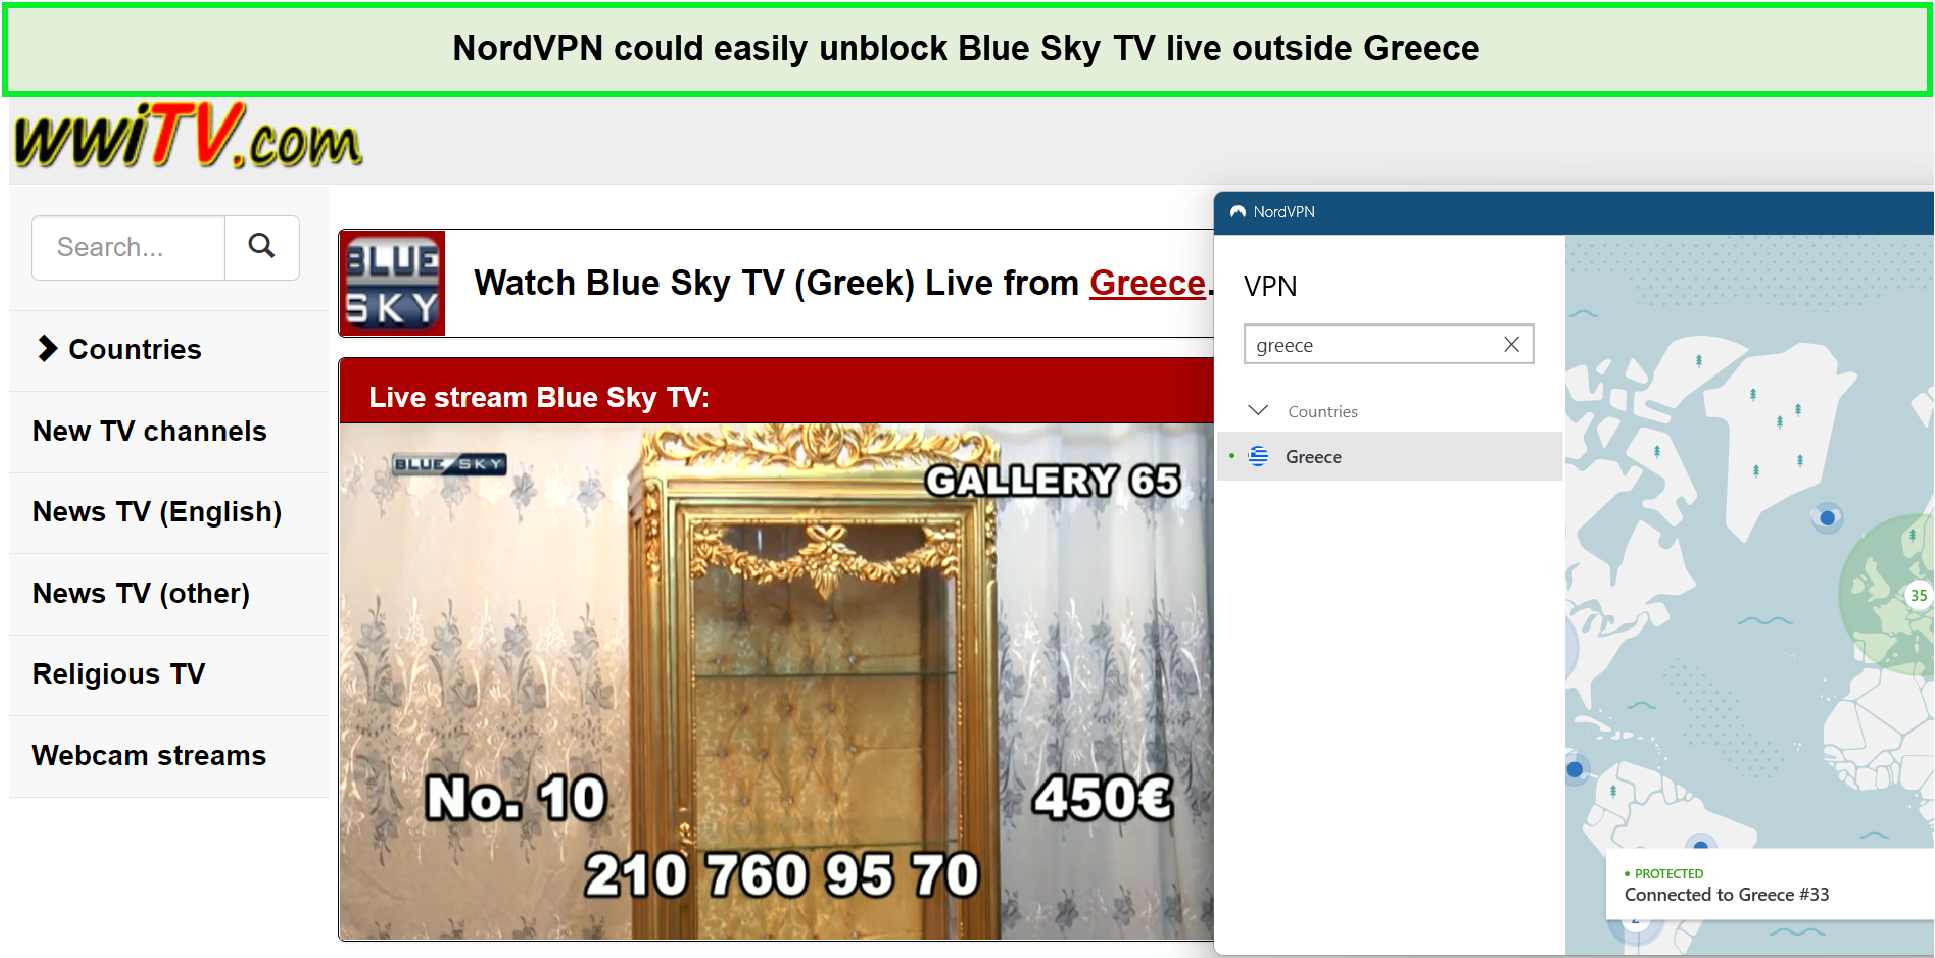 NordVPN-easily-unblock-Bly-Sky-TV-outside-Greece-For Spain Users